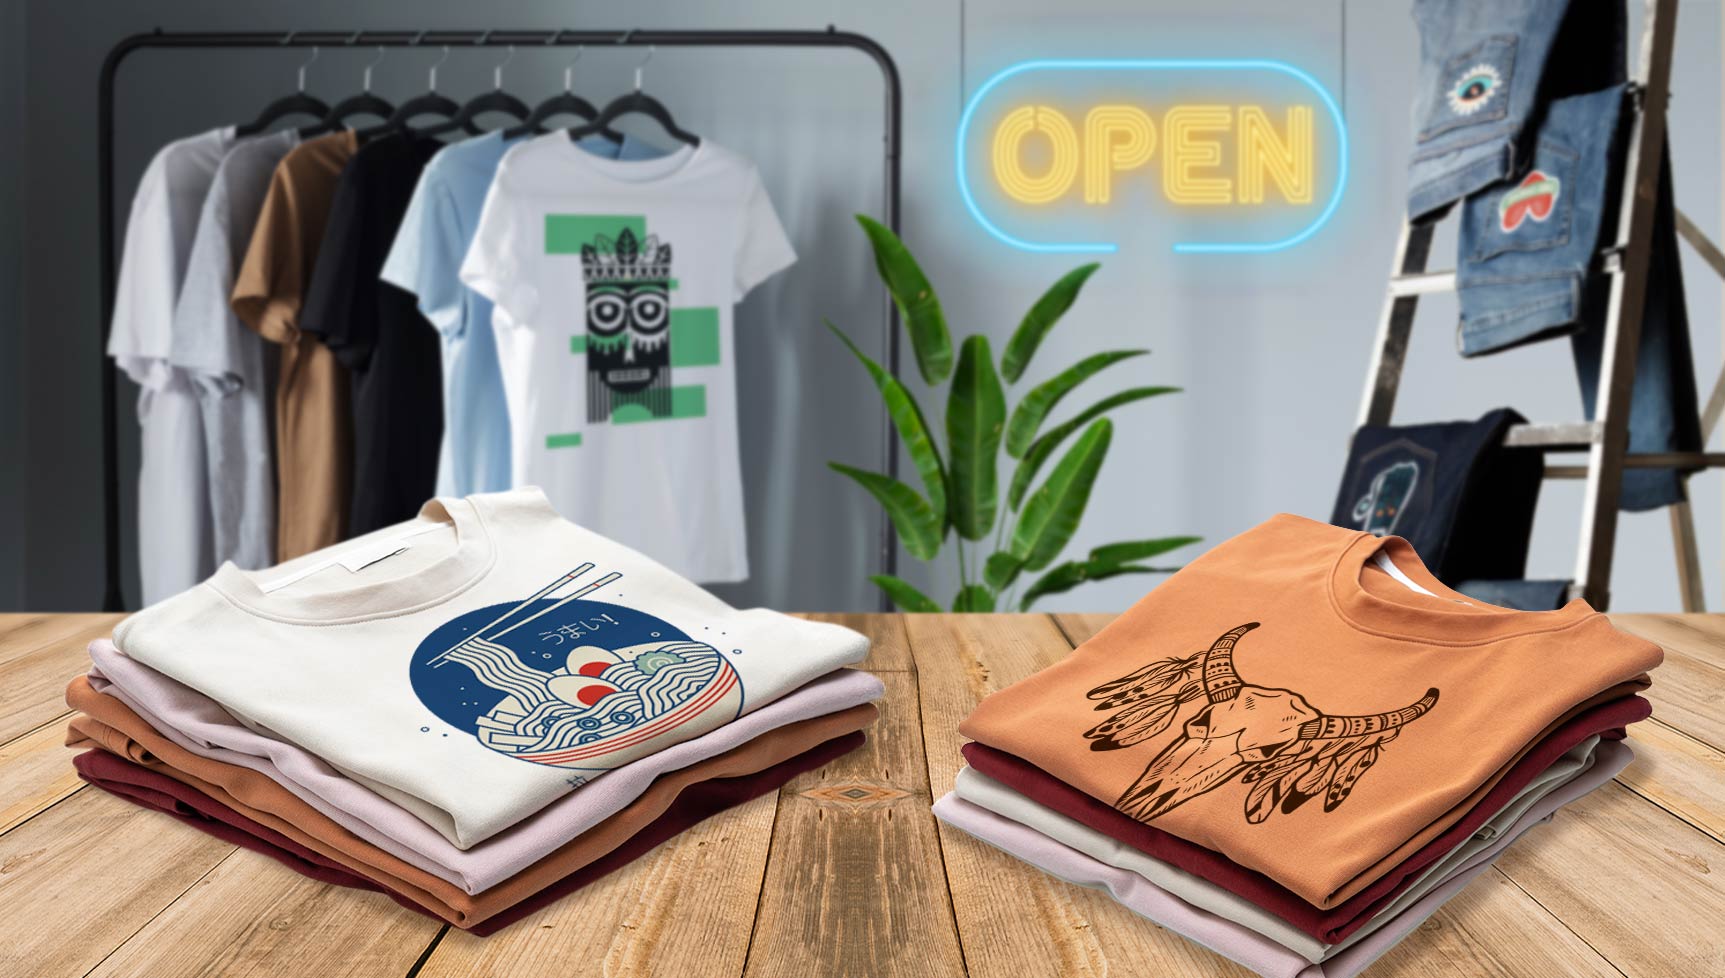 Personaliza tus camisetas con vinilo textil - Tienda Sublimacion